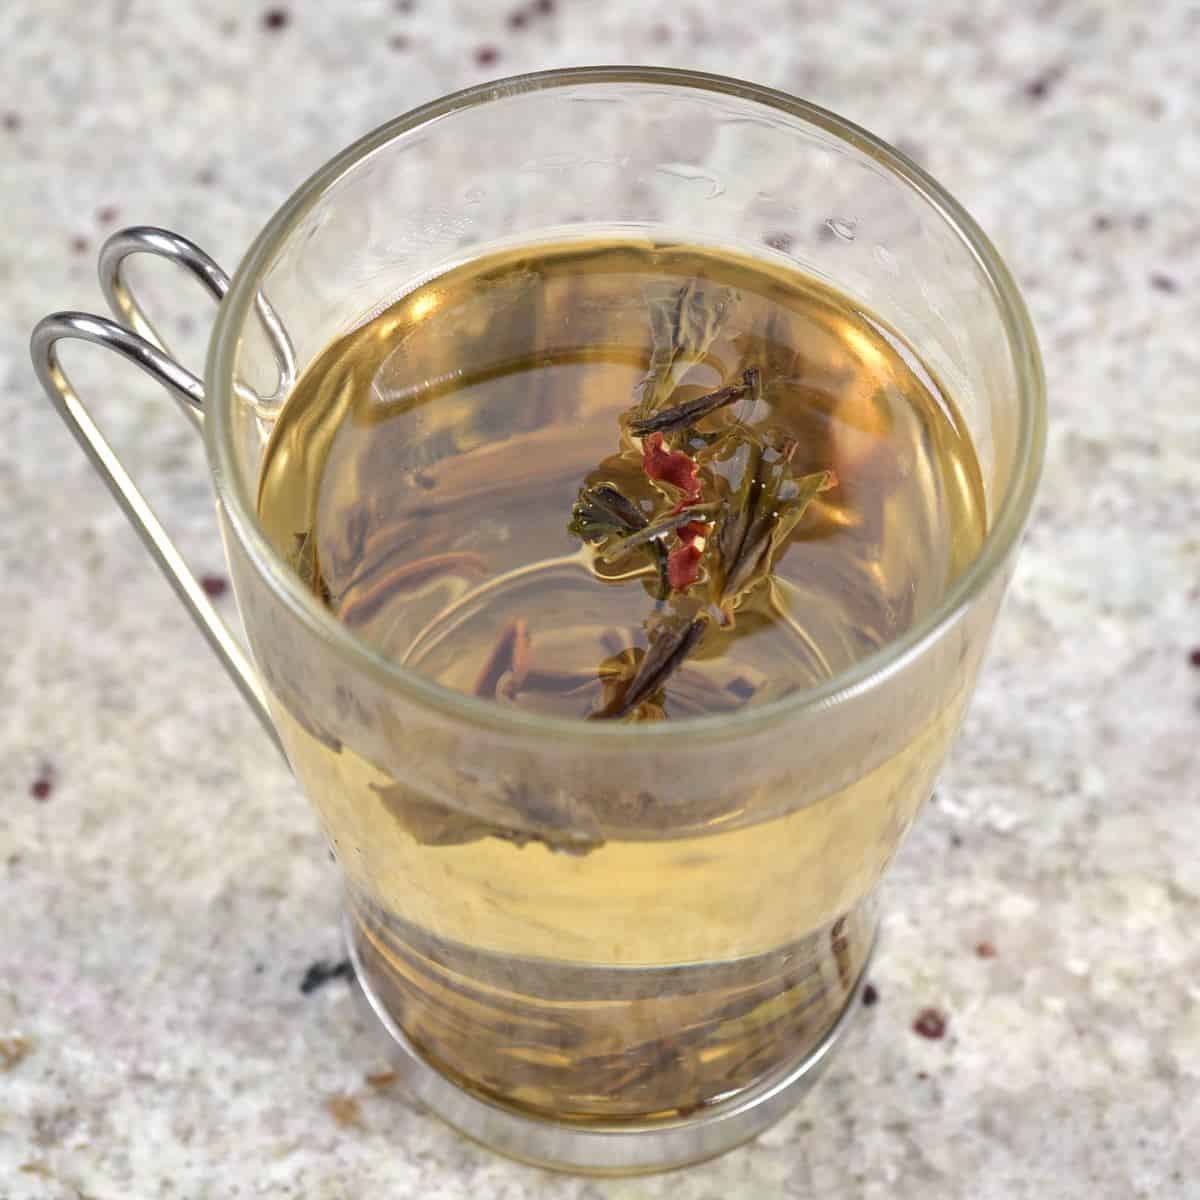 Tea Camellia Sinensis 10 seeds Grow Your Own Green Tea matcha English breakfast 